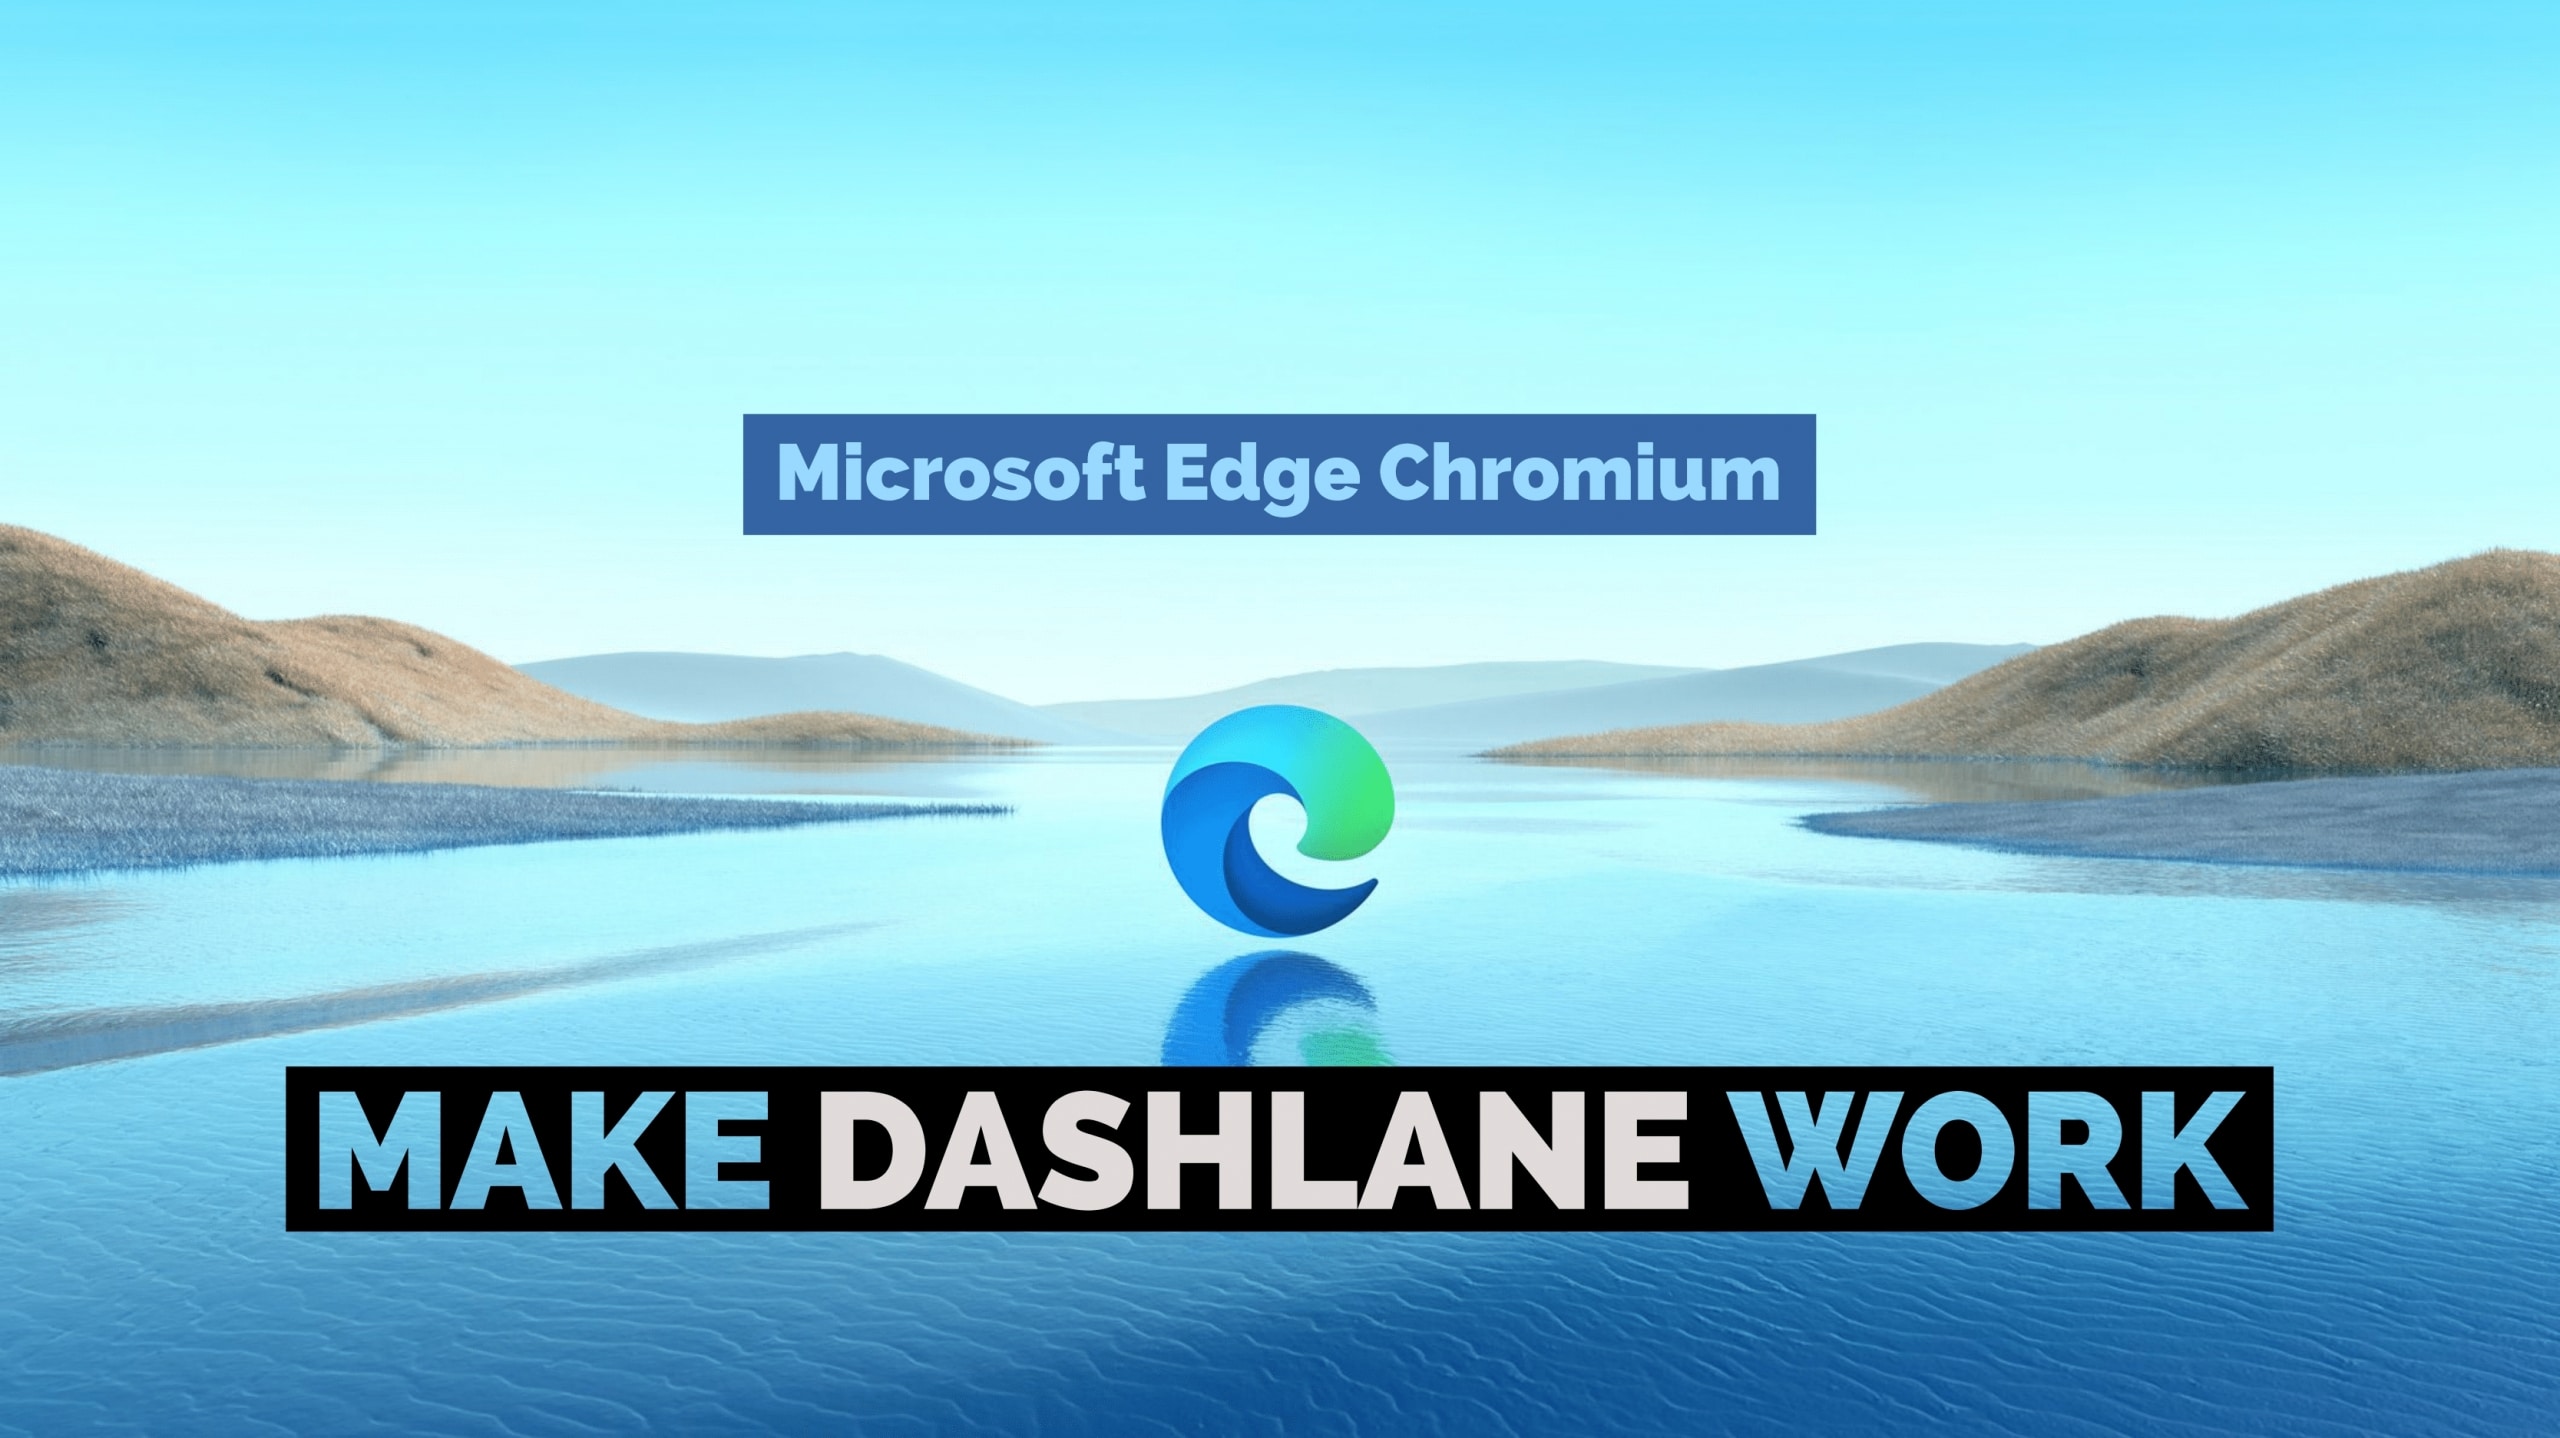 Dashlane이 Microsoft Edge Chromium titelbild를 스케일링하여 작동하게하십시오